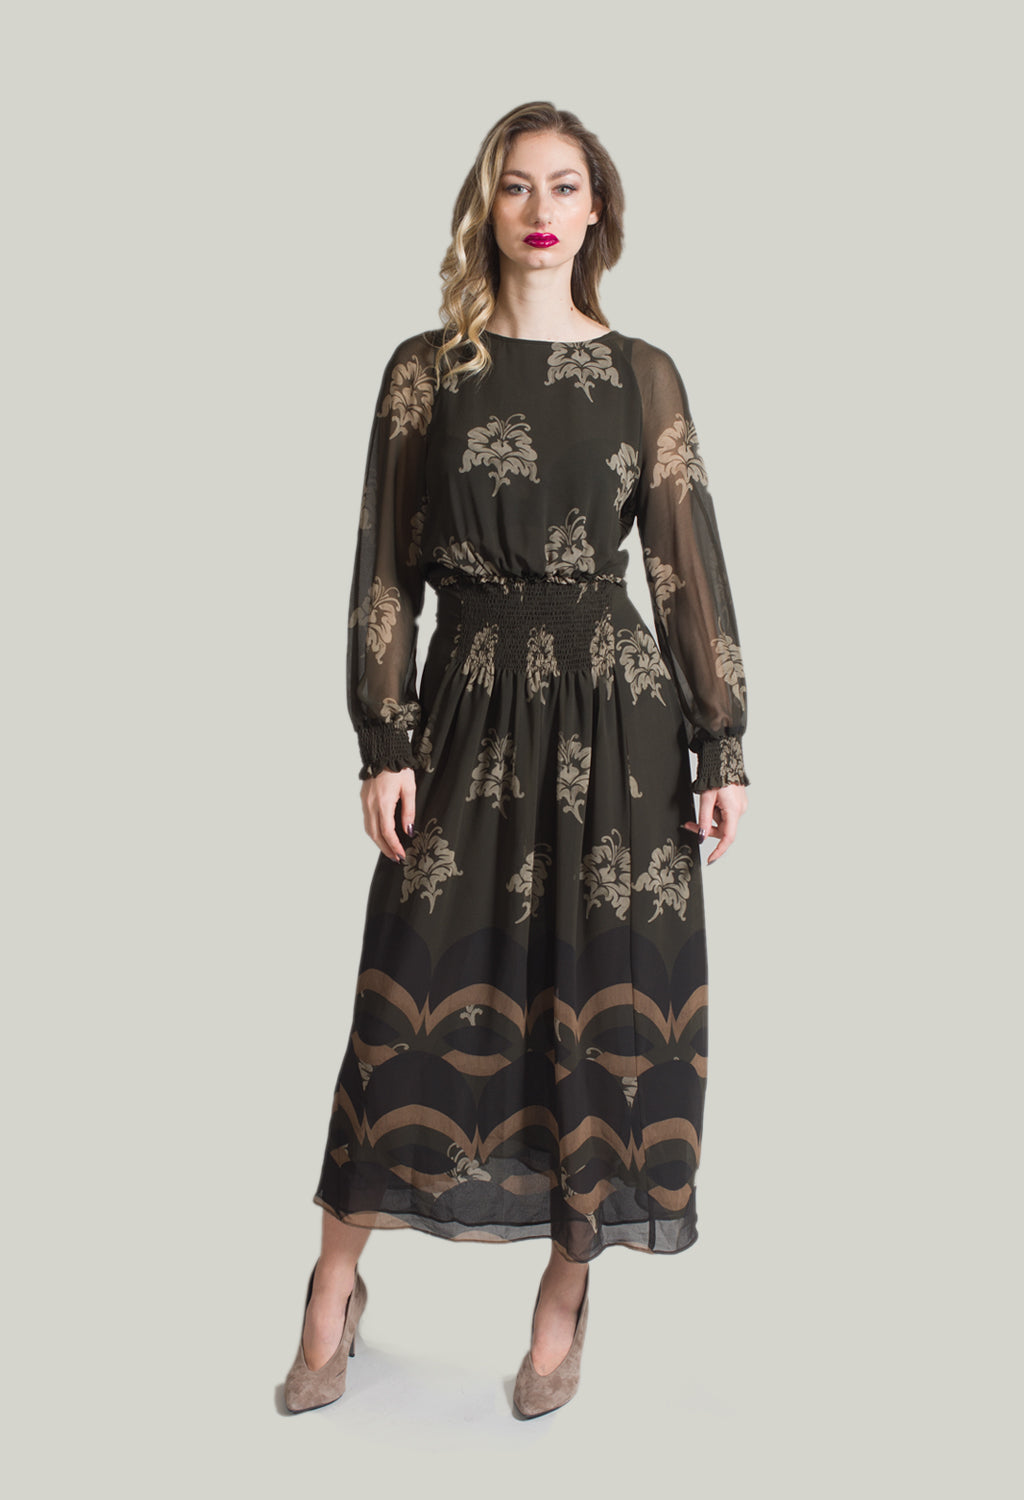 Printed Sheer Maxi Dress in Moro / Fango / Beige